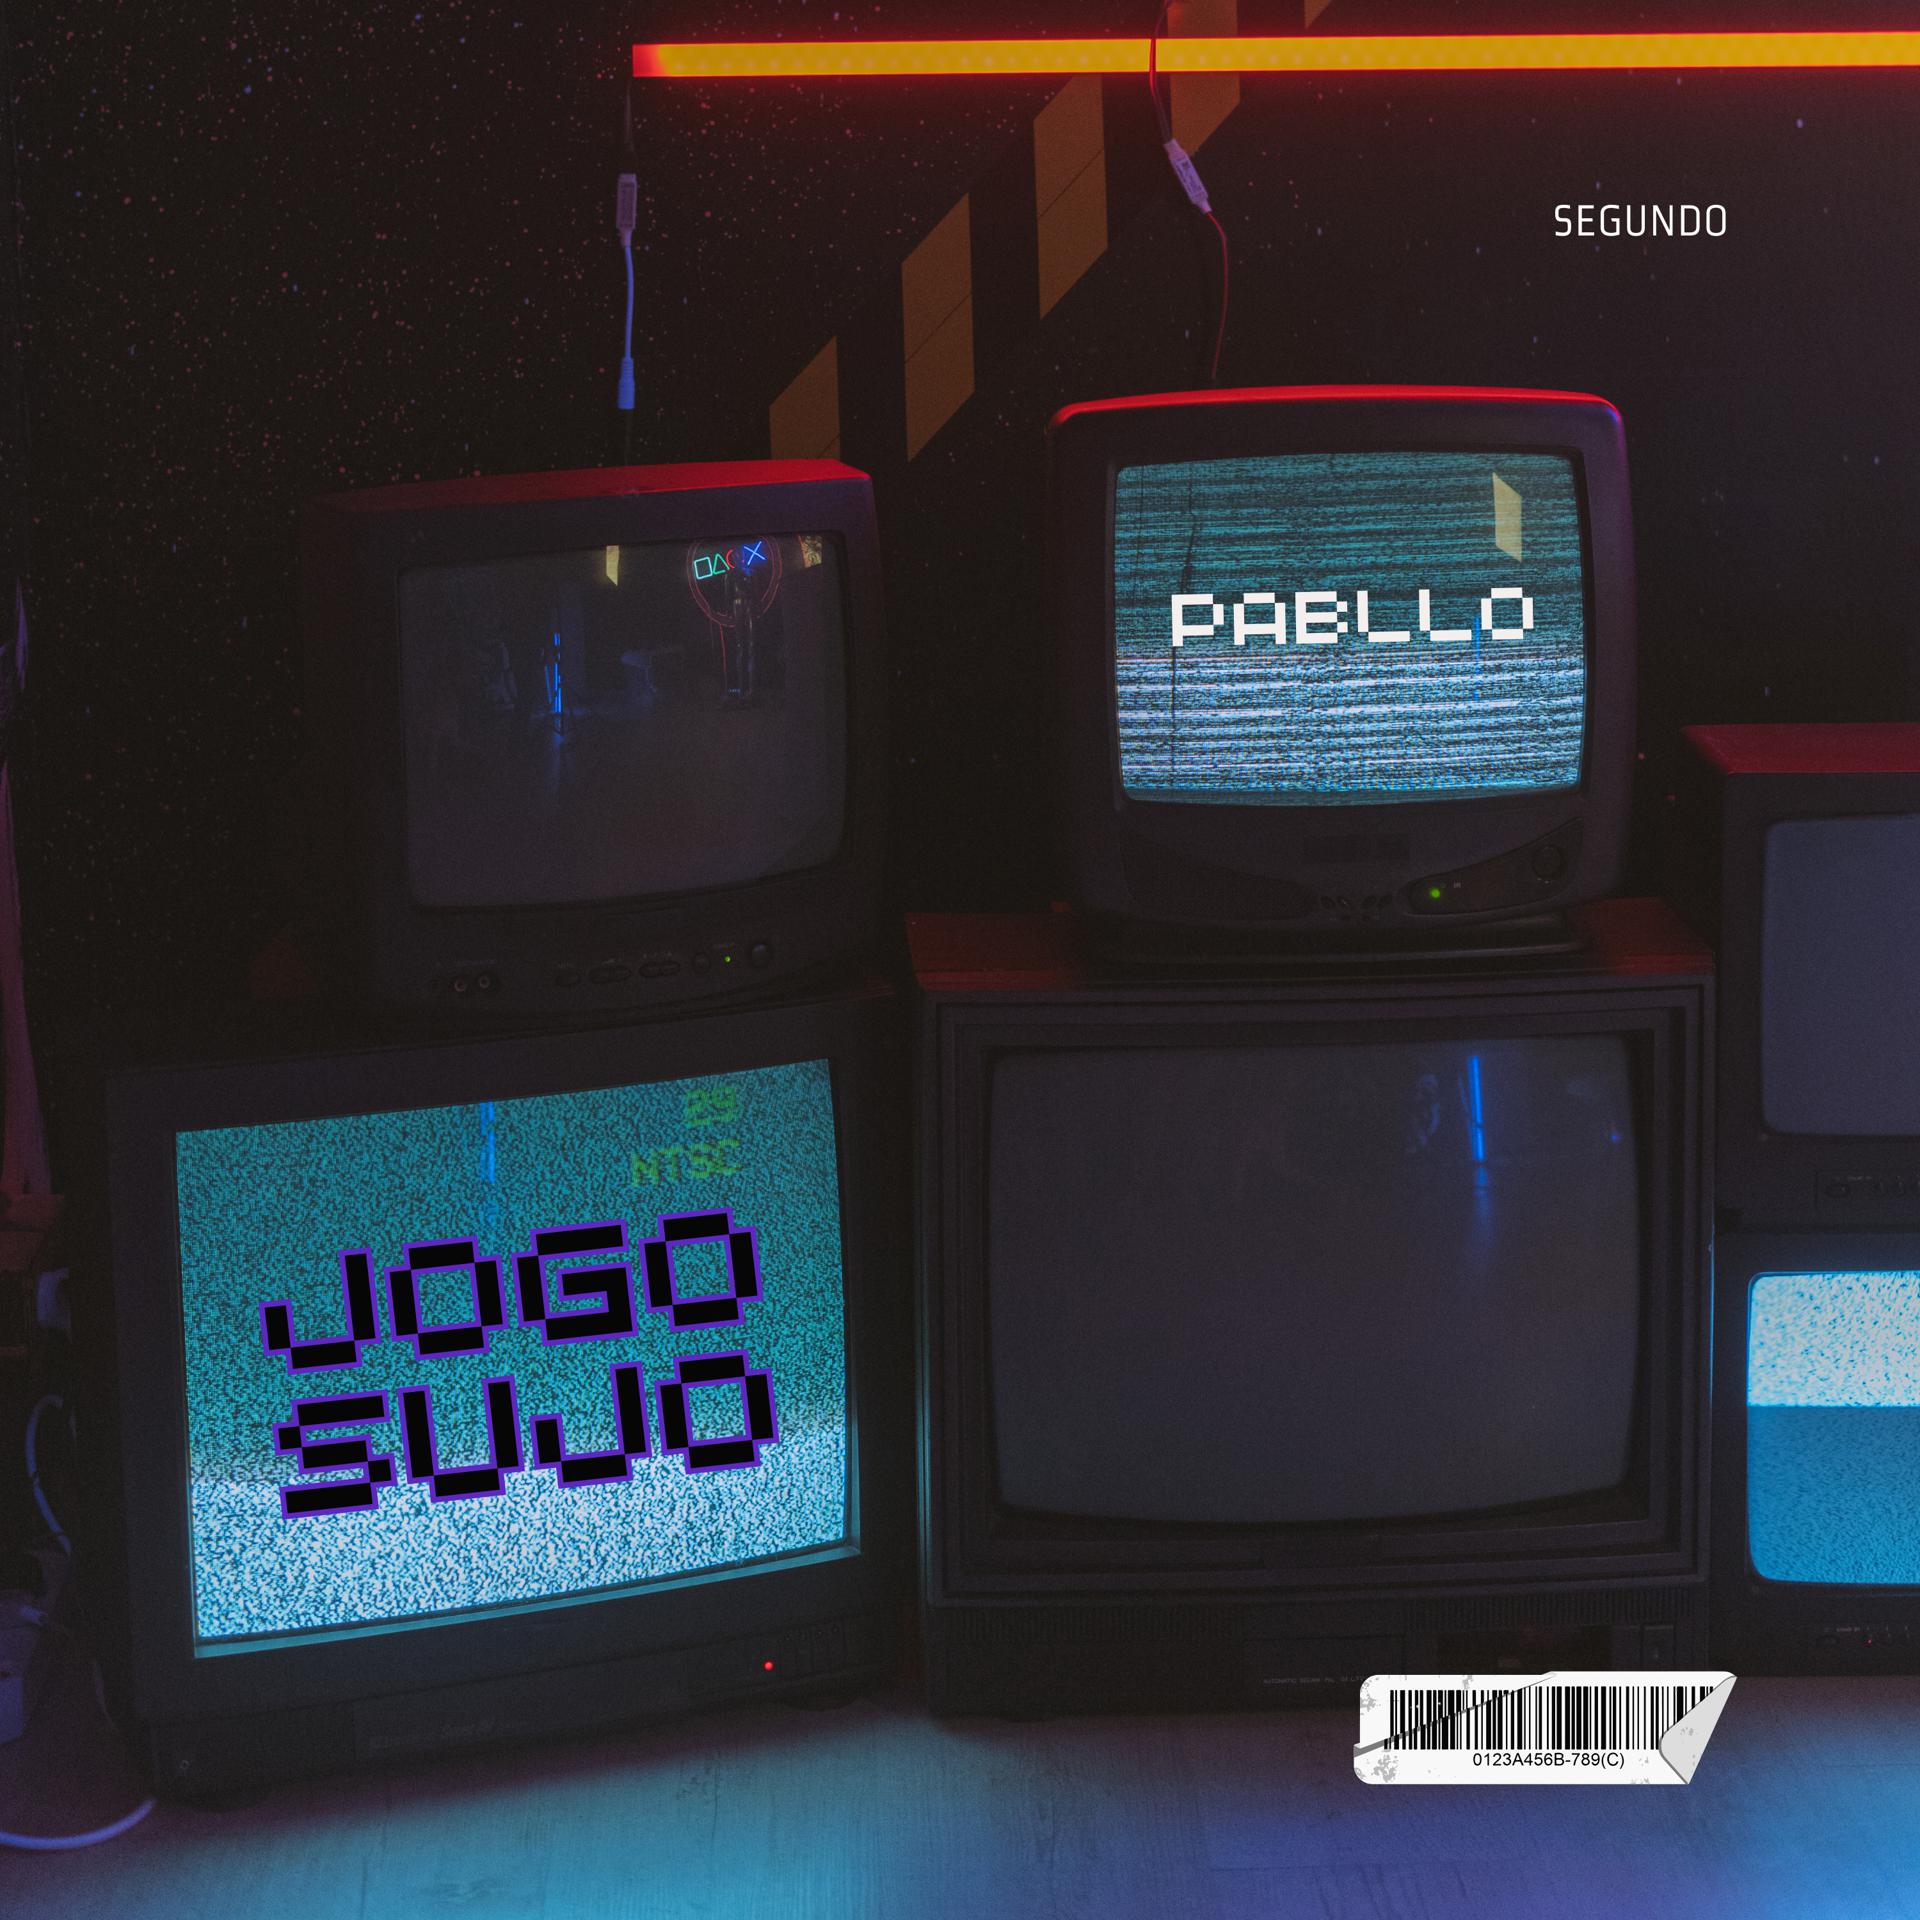 Постер альбома Jogo Sujo